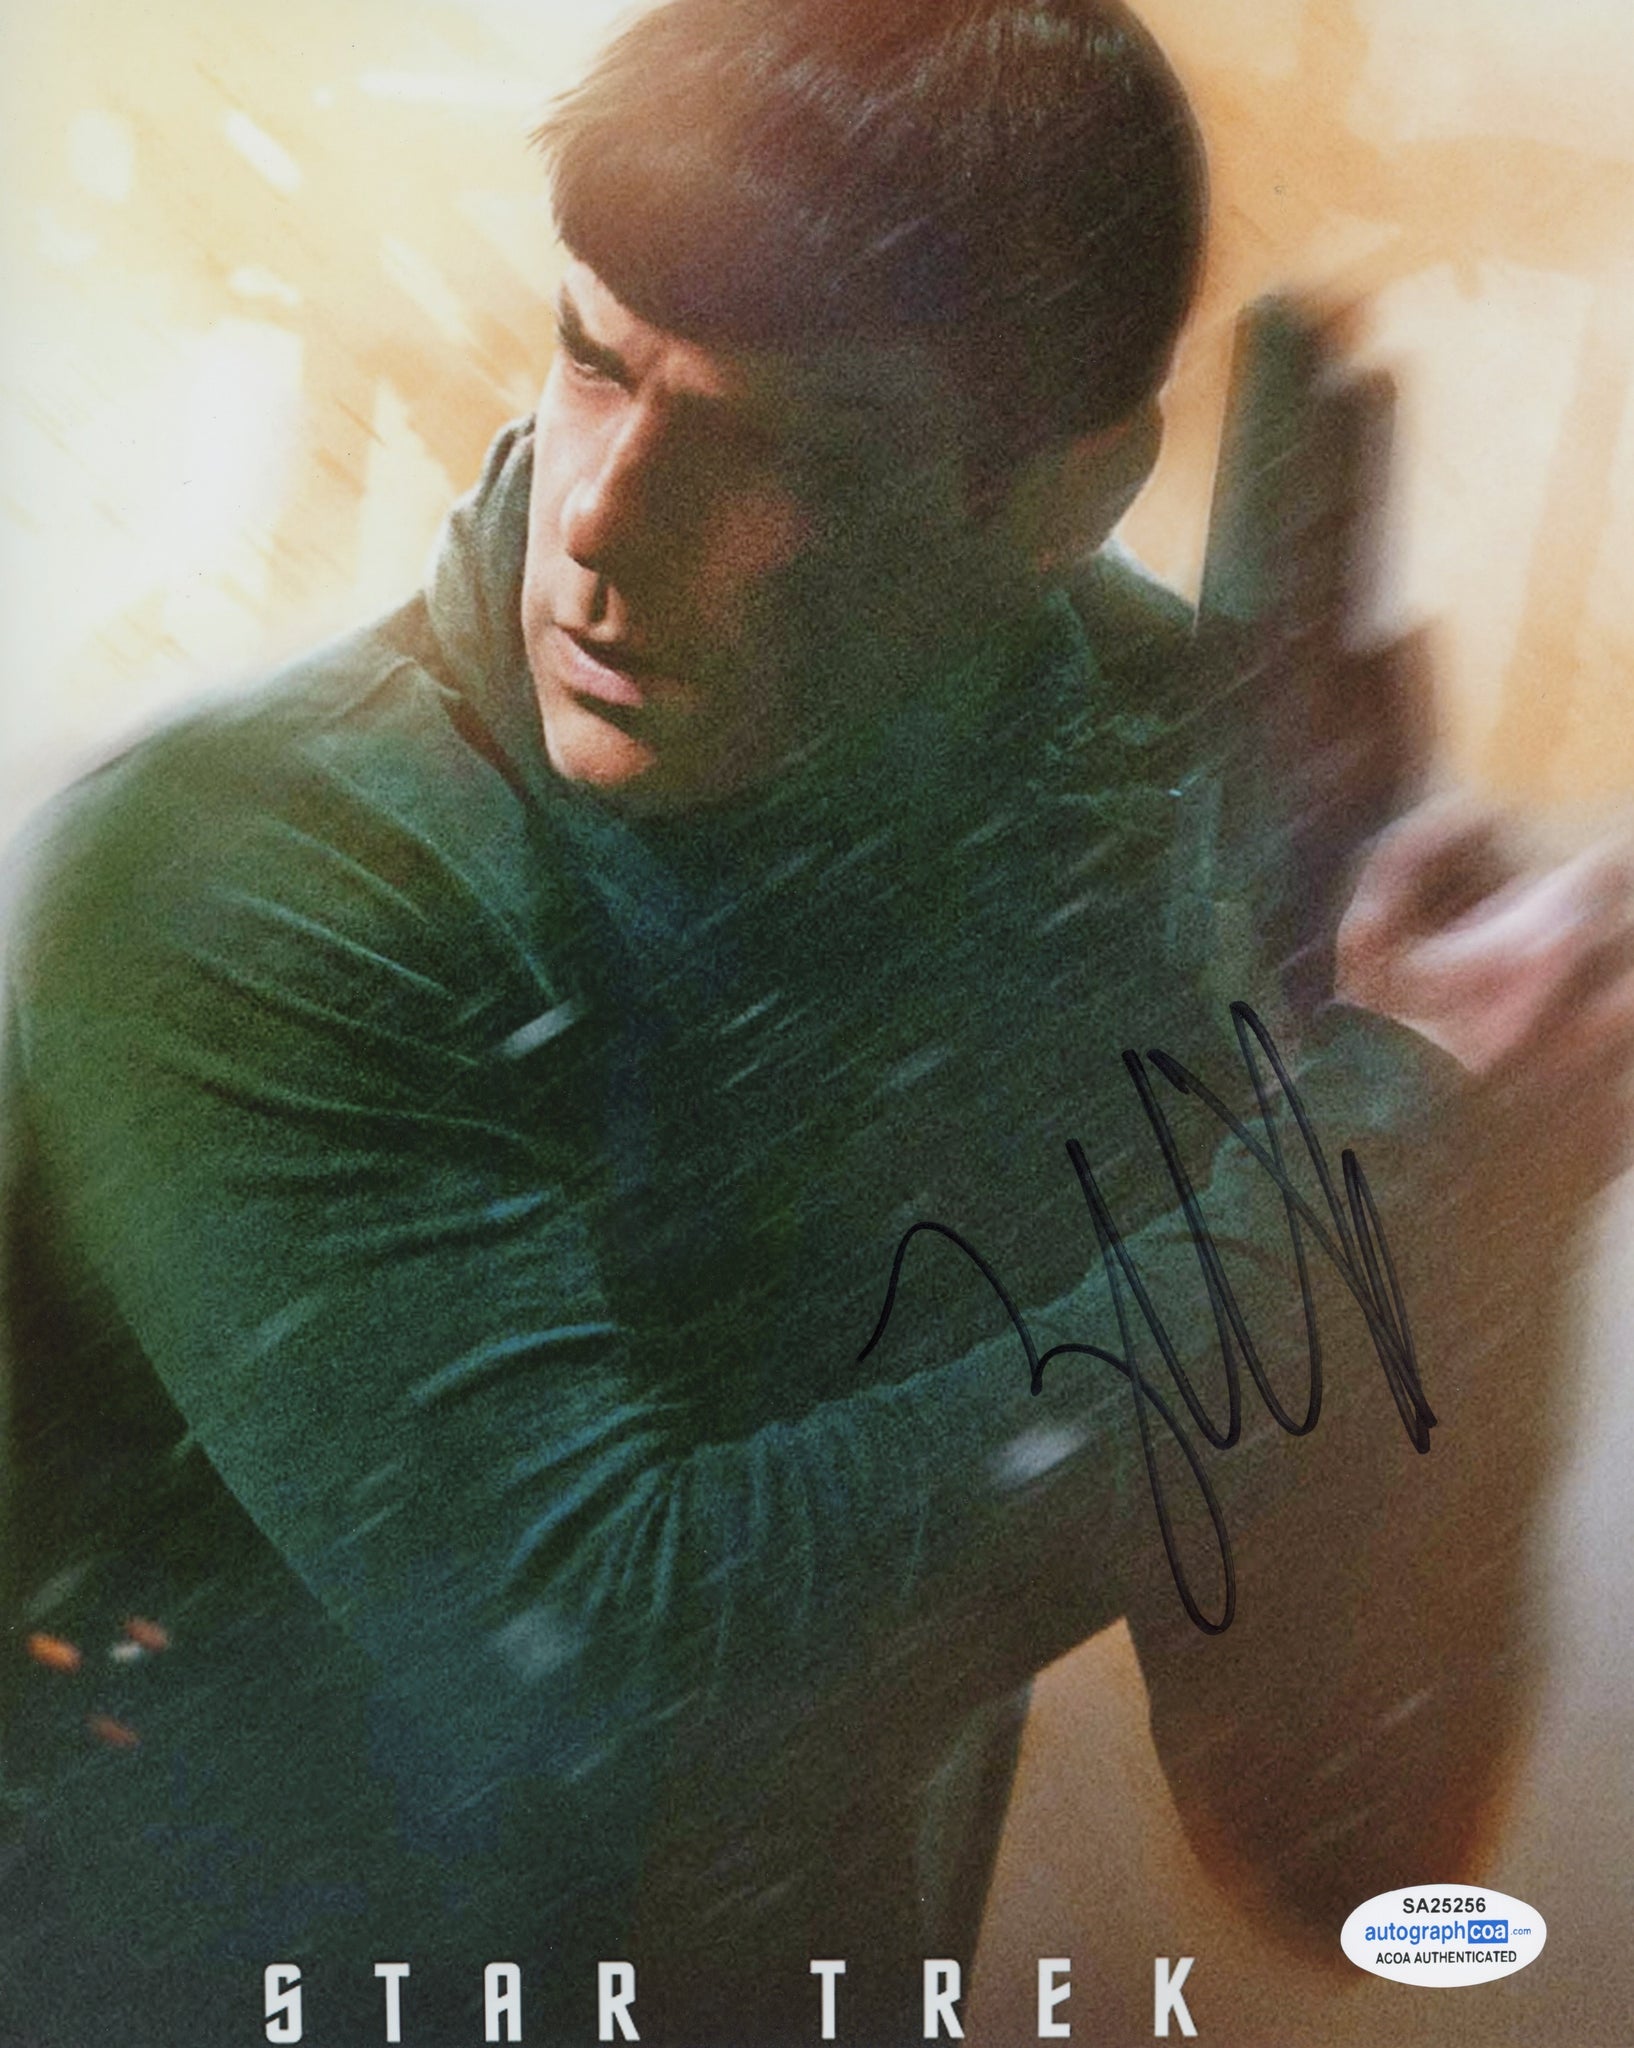 Zachary Quinto Star Trek Signed Autograph 8x10 Photo ACOA #8 - Outlaw Hobbies Authentic Autographs